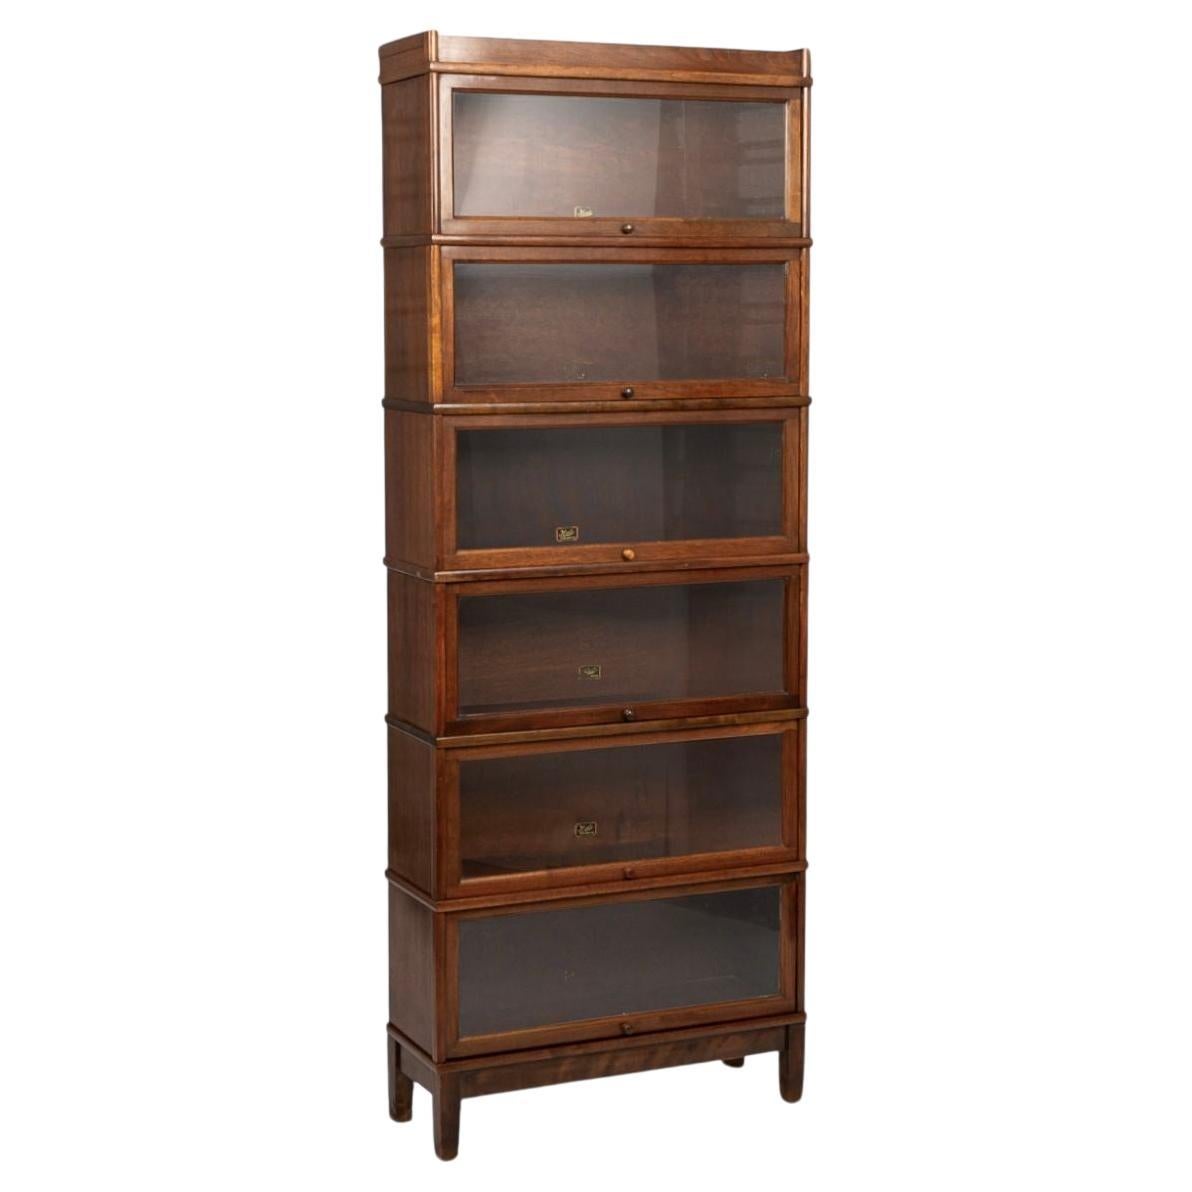 Antique Tall Mahogany Wood Barrister Bookcase Cabinet Six Shelf